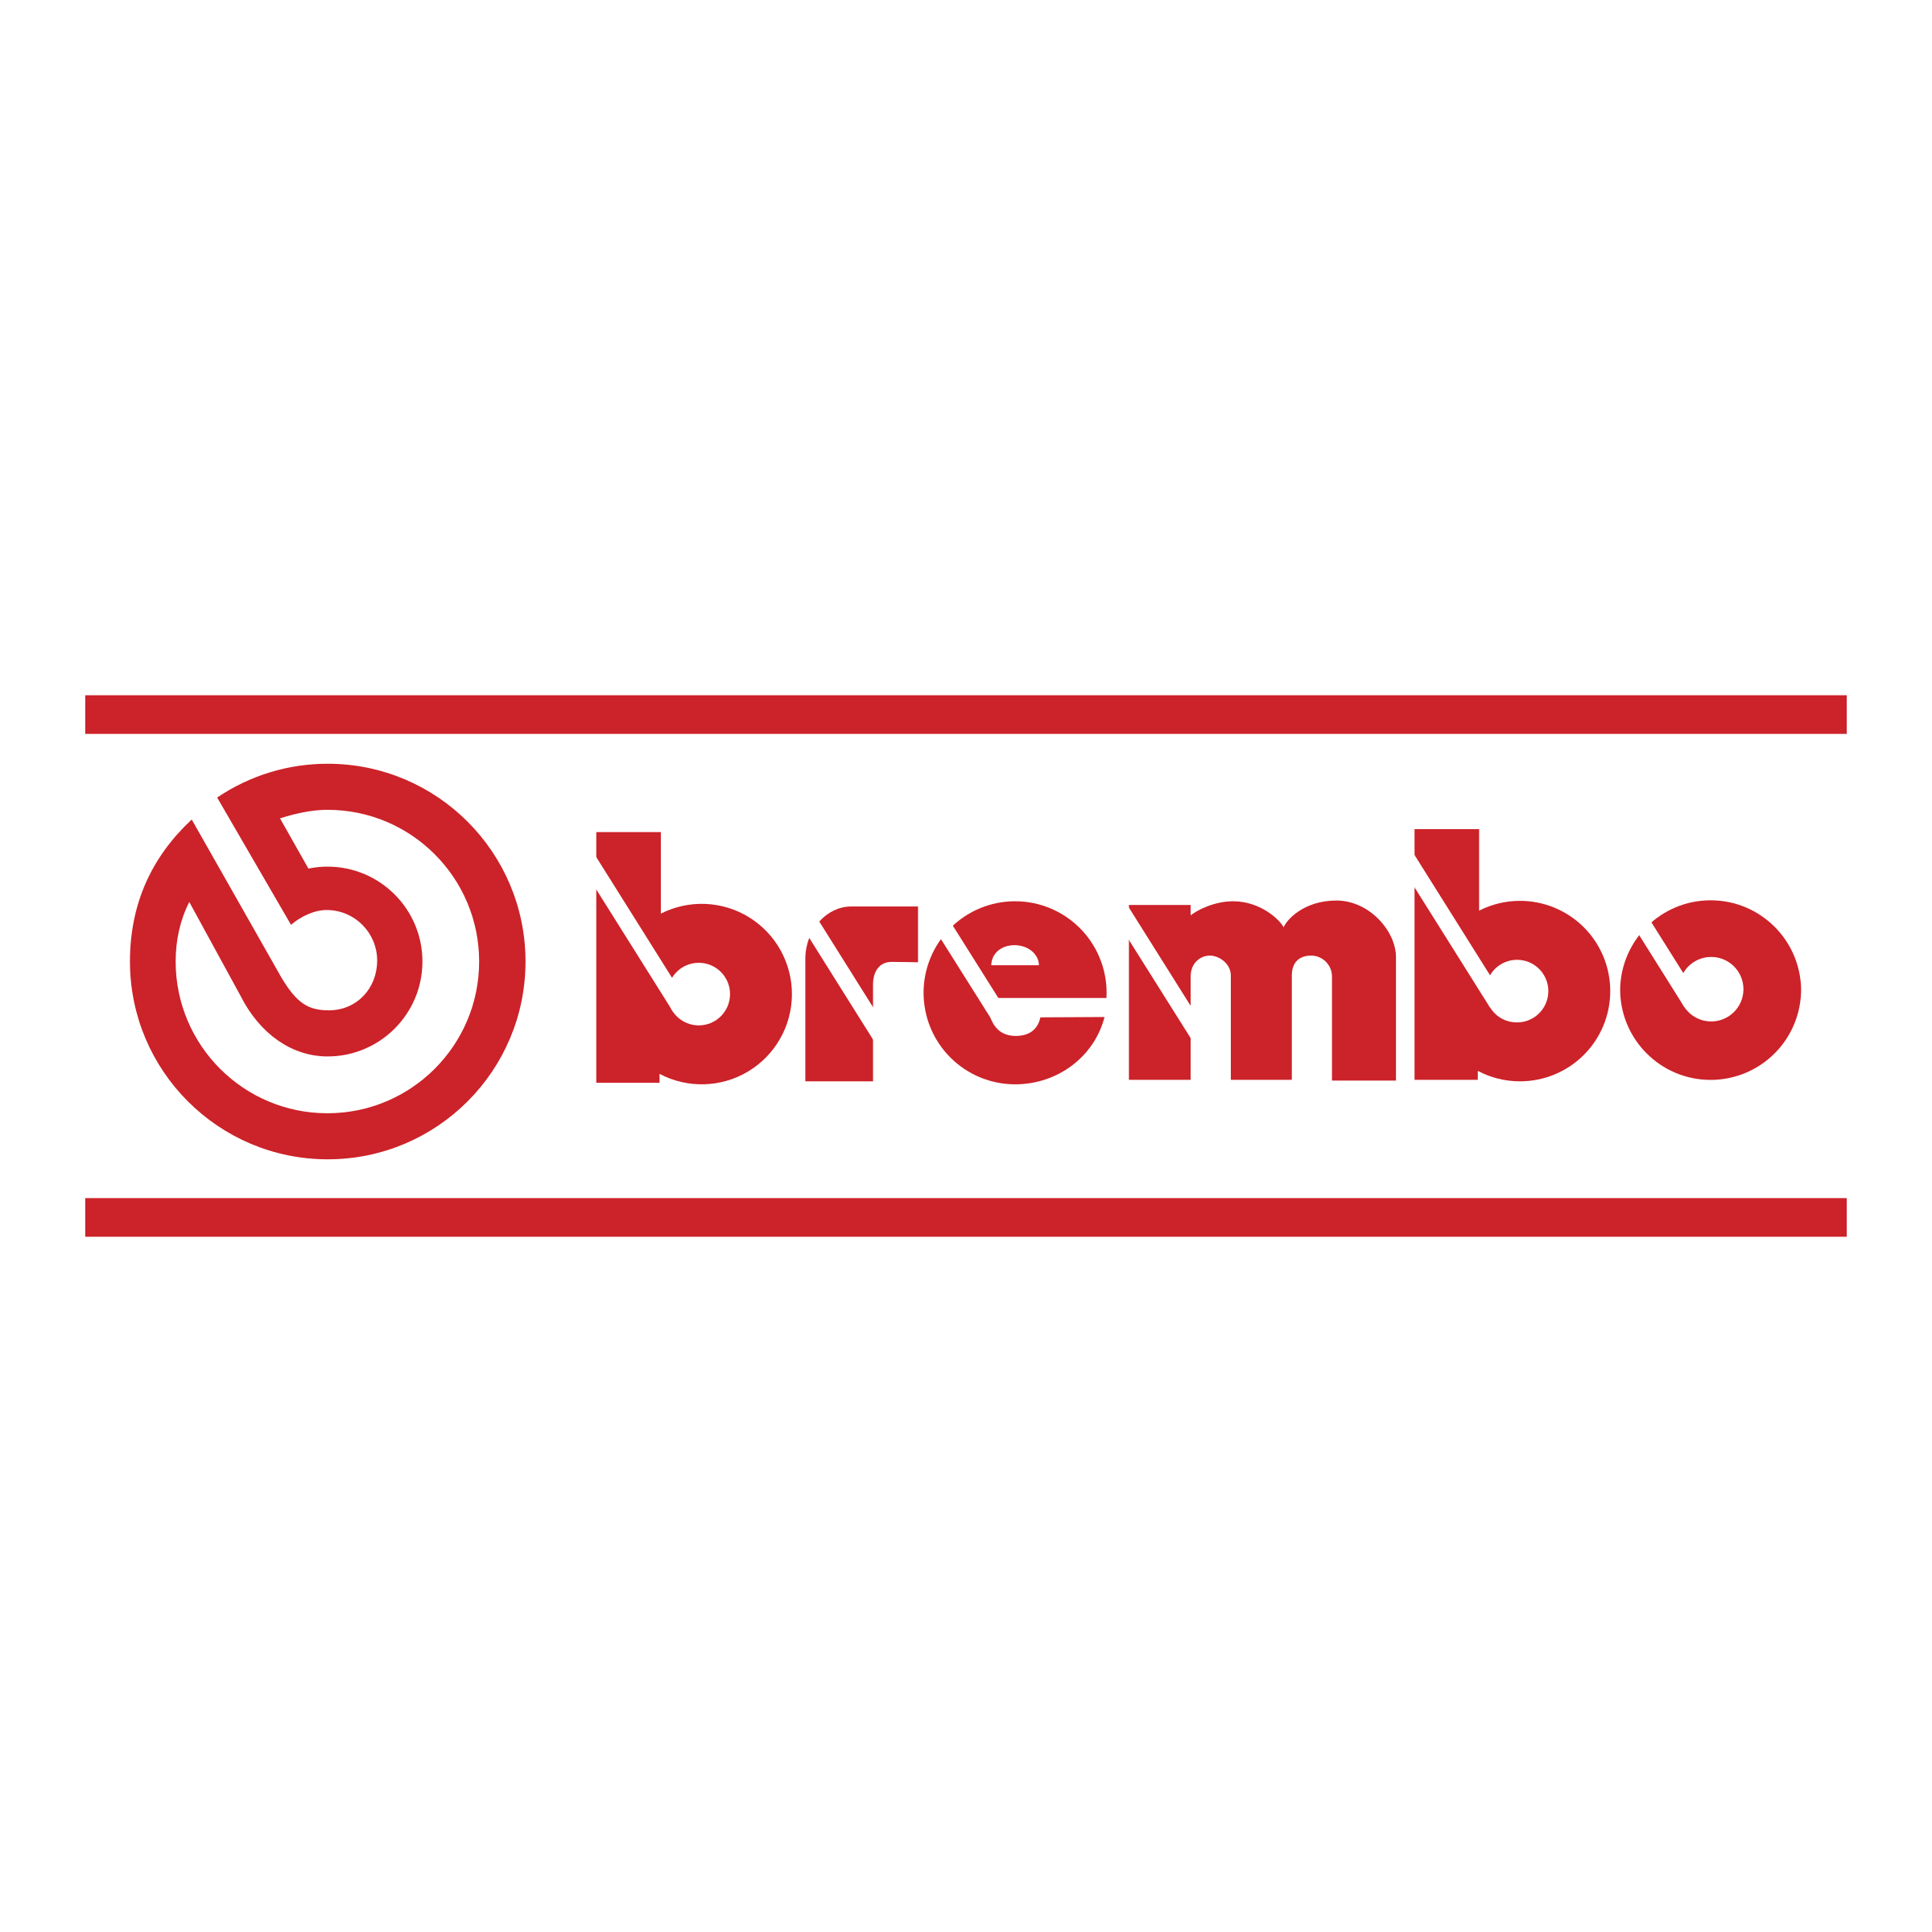 Brembo Logo - Brembo Logo PNG Transparent & SVG Vector - Freebie Supply